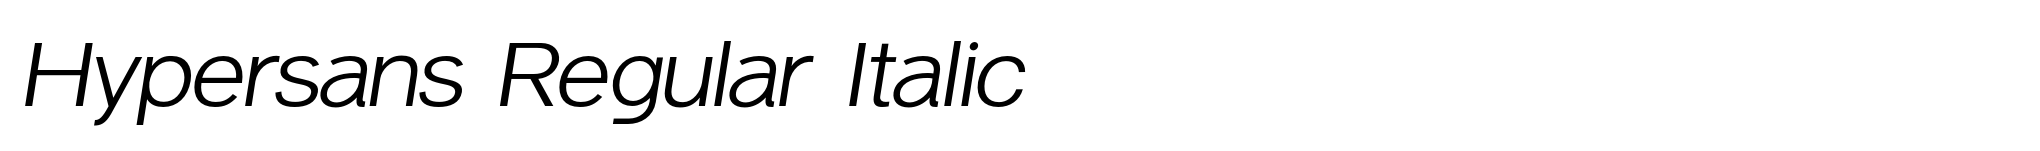 Hypersans Regular Italic image